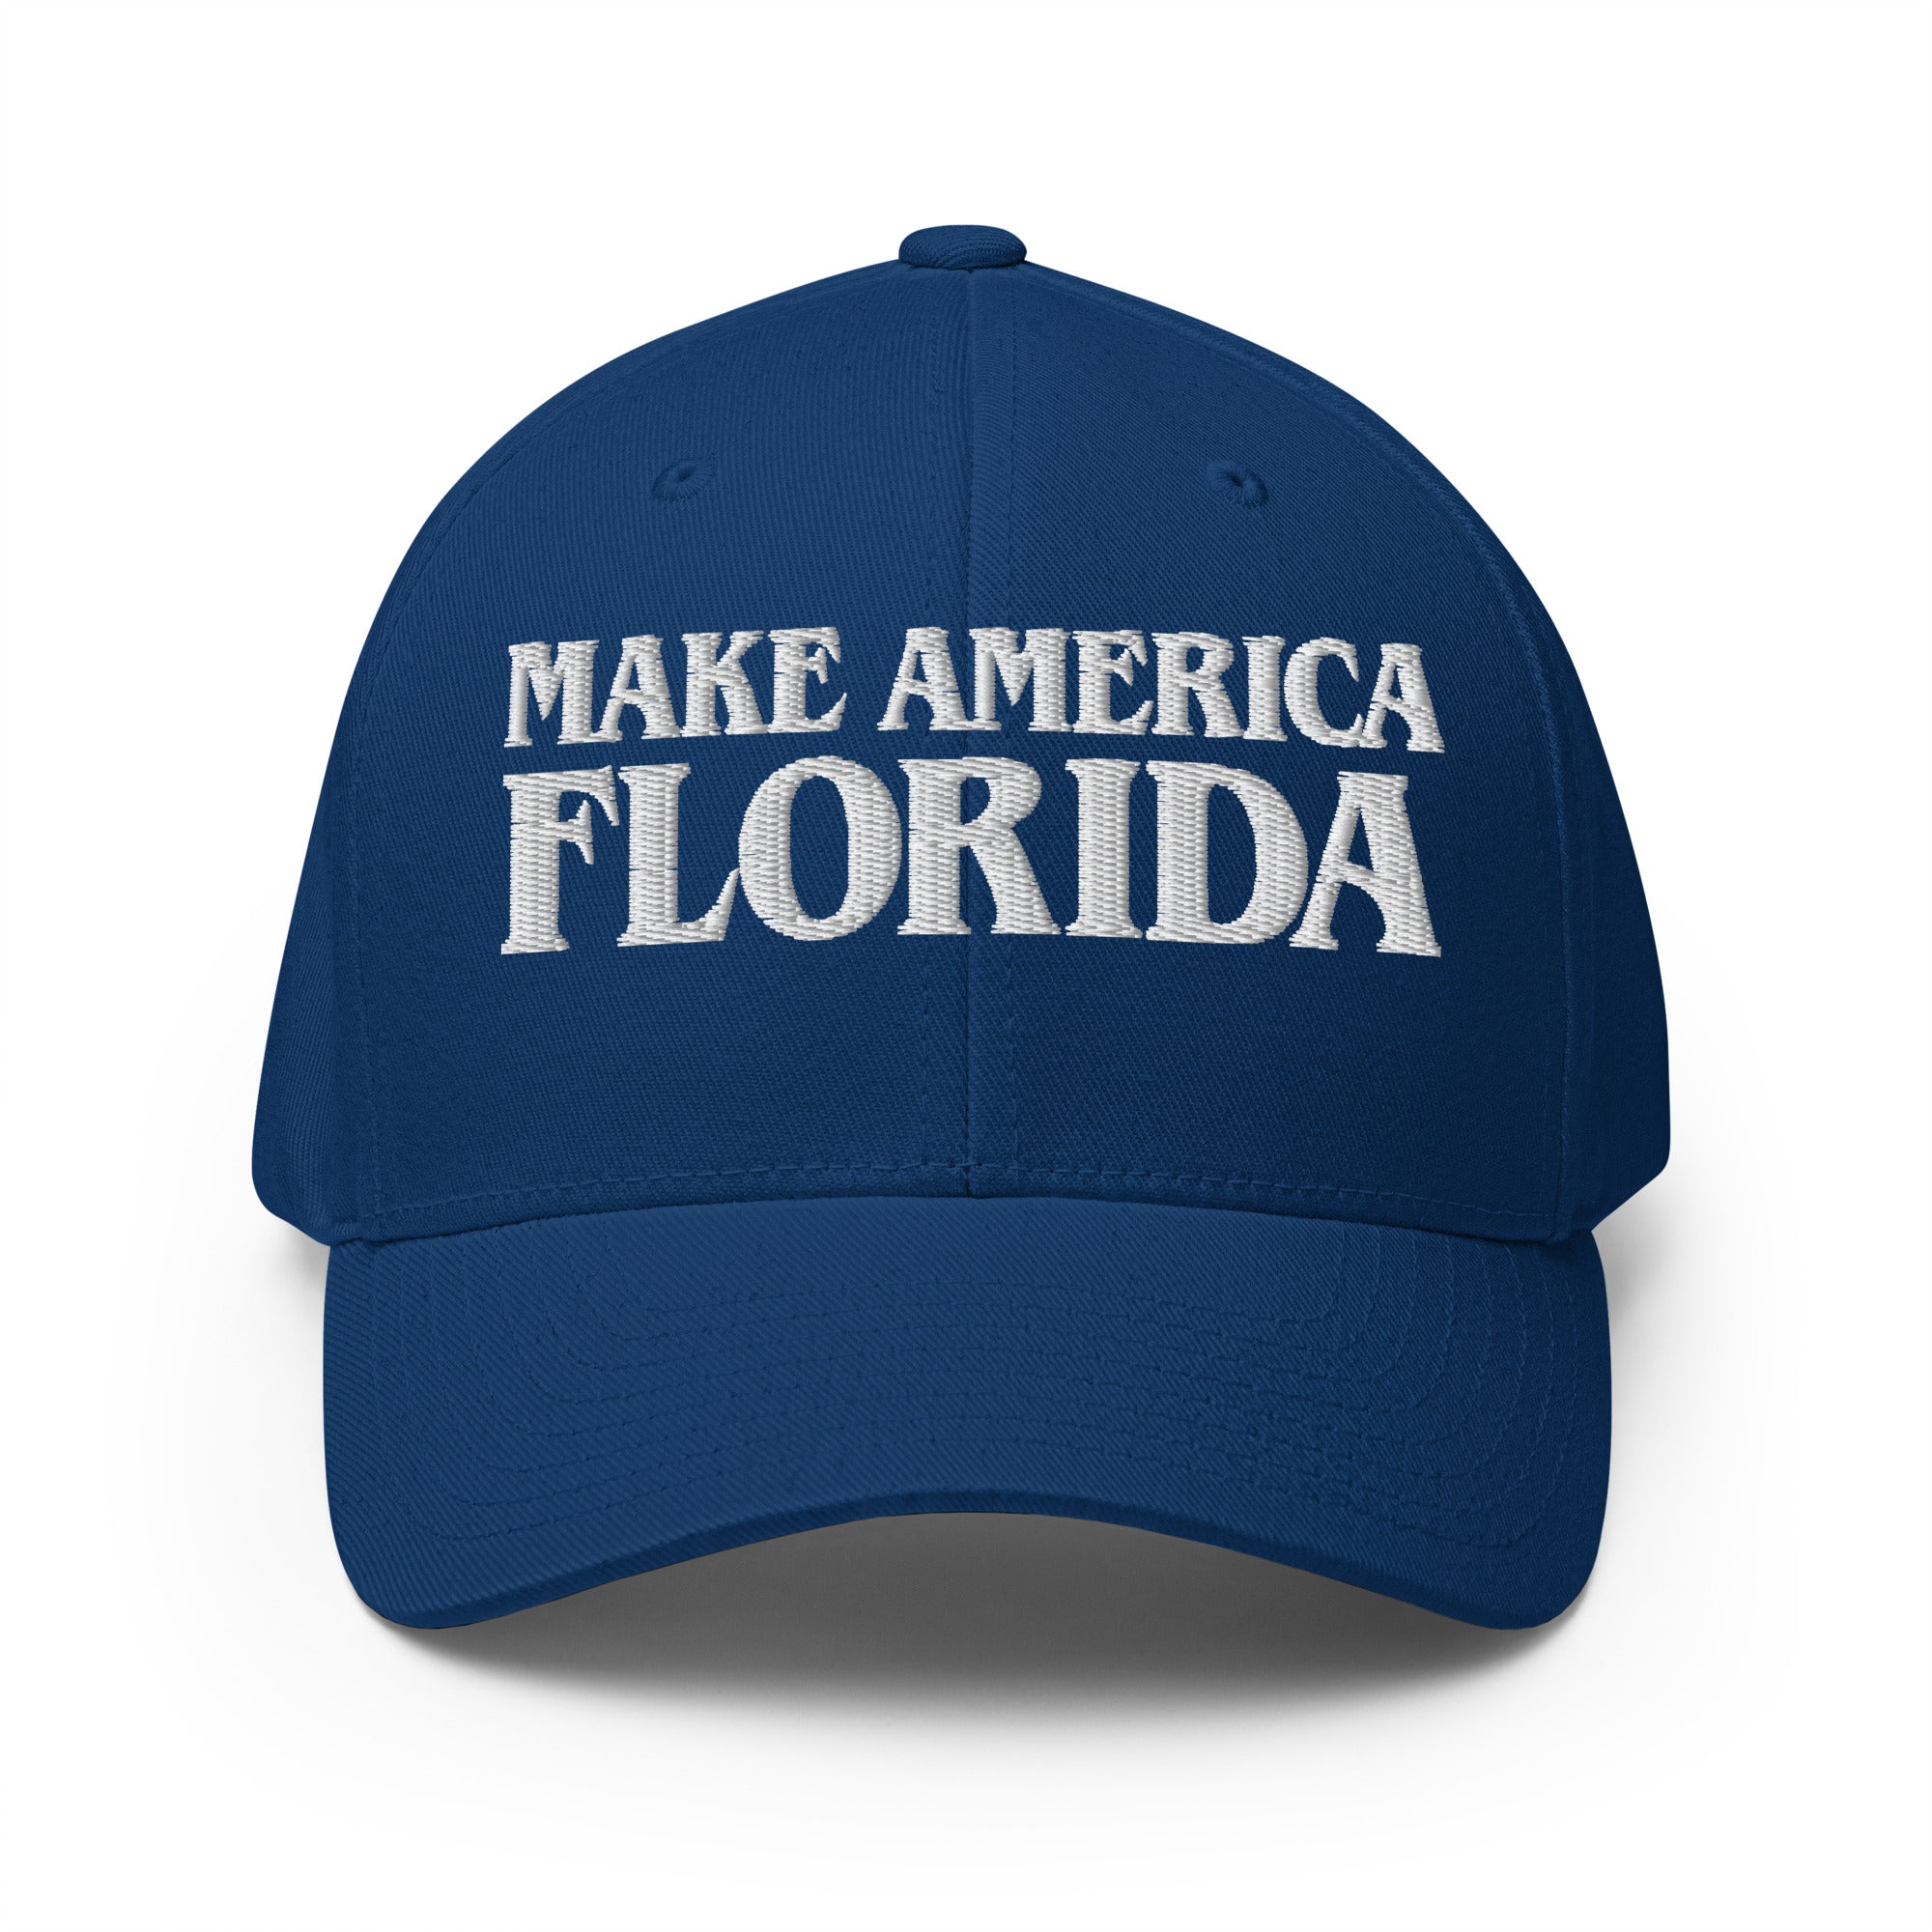 Make America Florida Flexfit Twill Cap